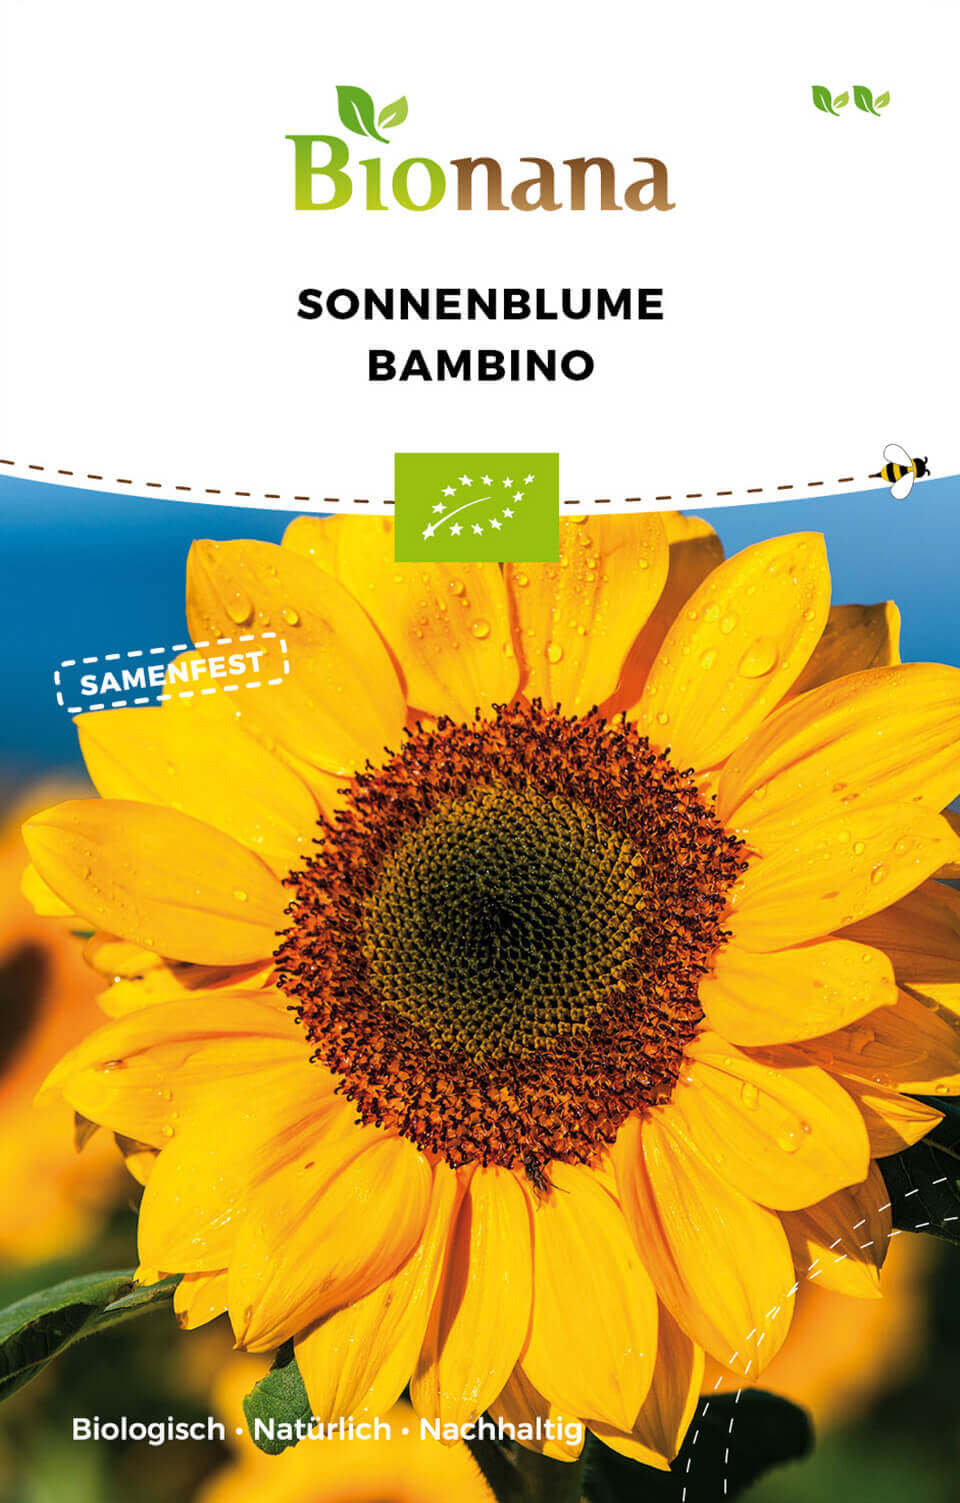 Sonnenblume Bambino | BIO Sonnenblumensamen von Bionana